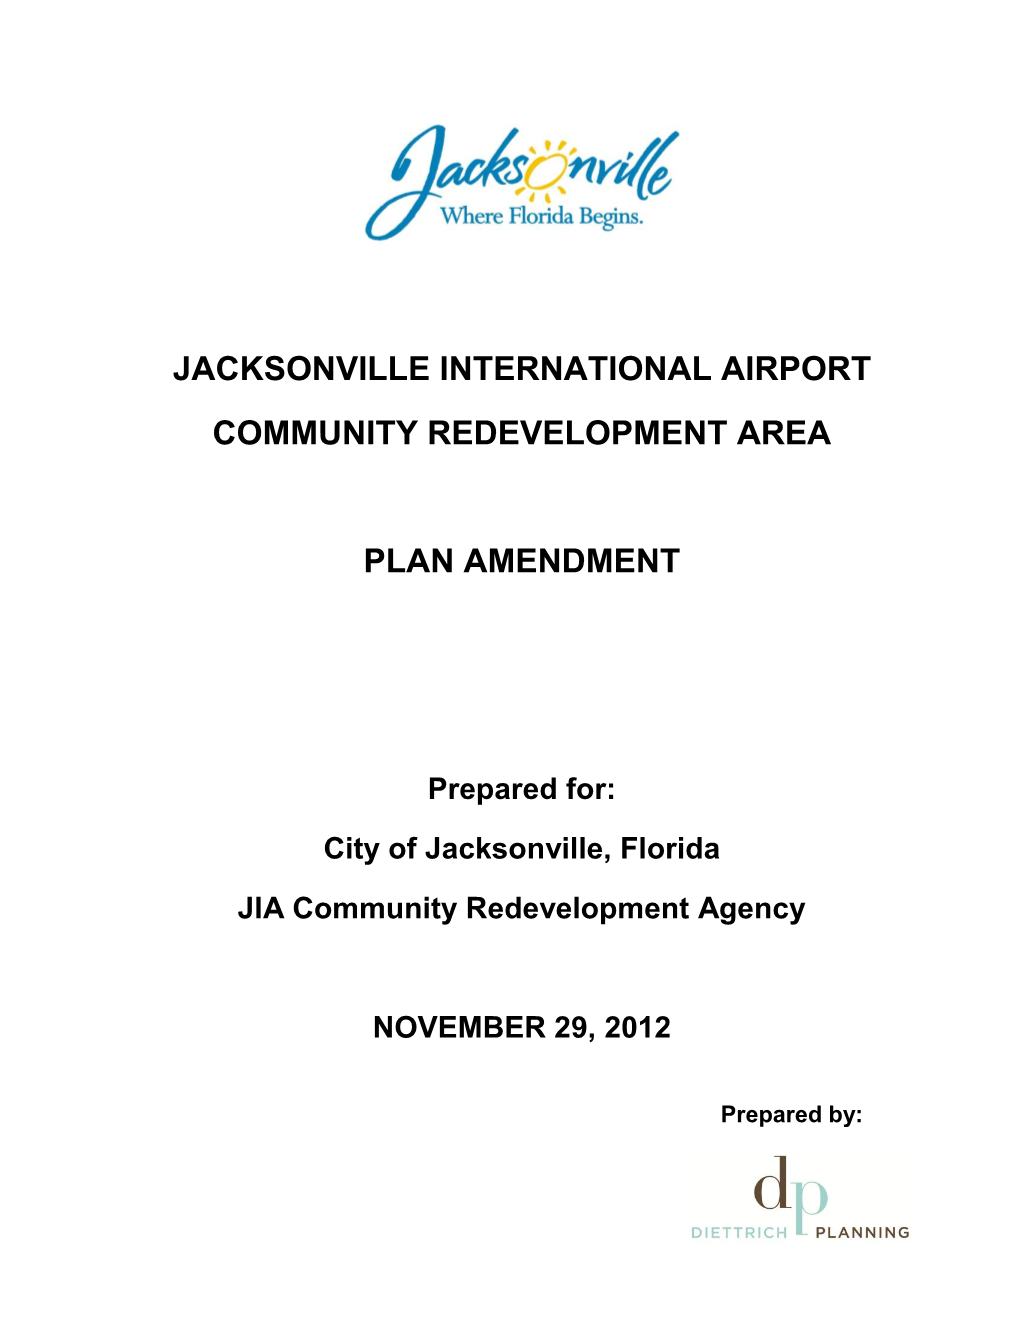 Jacksonville International Airport Community Redevelopment Area